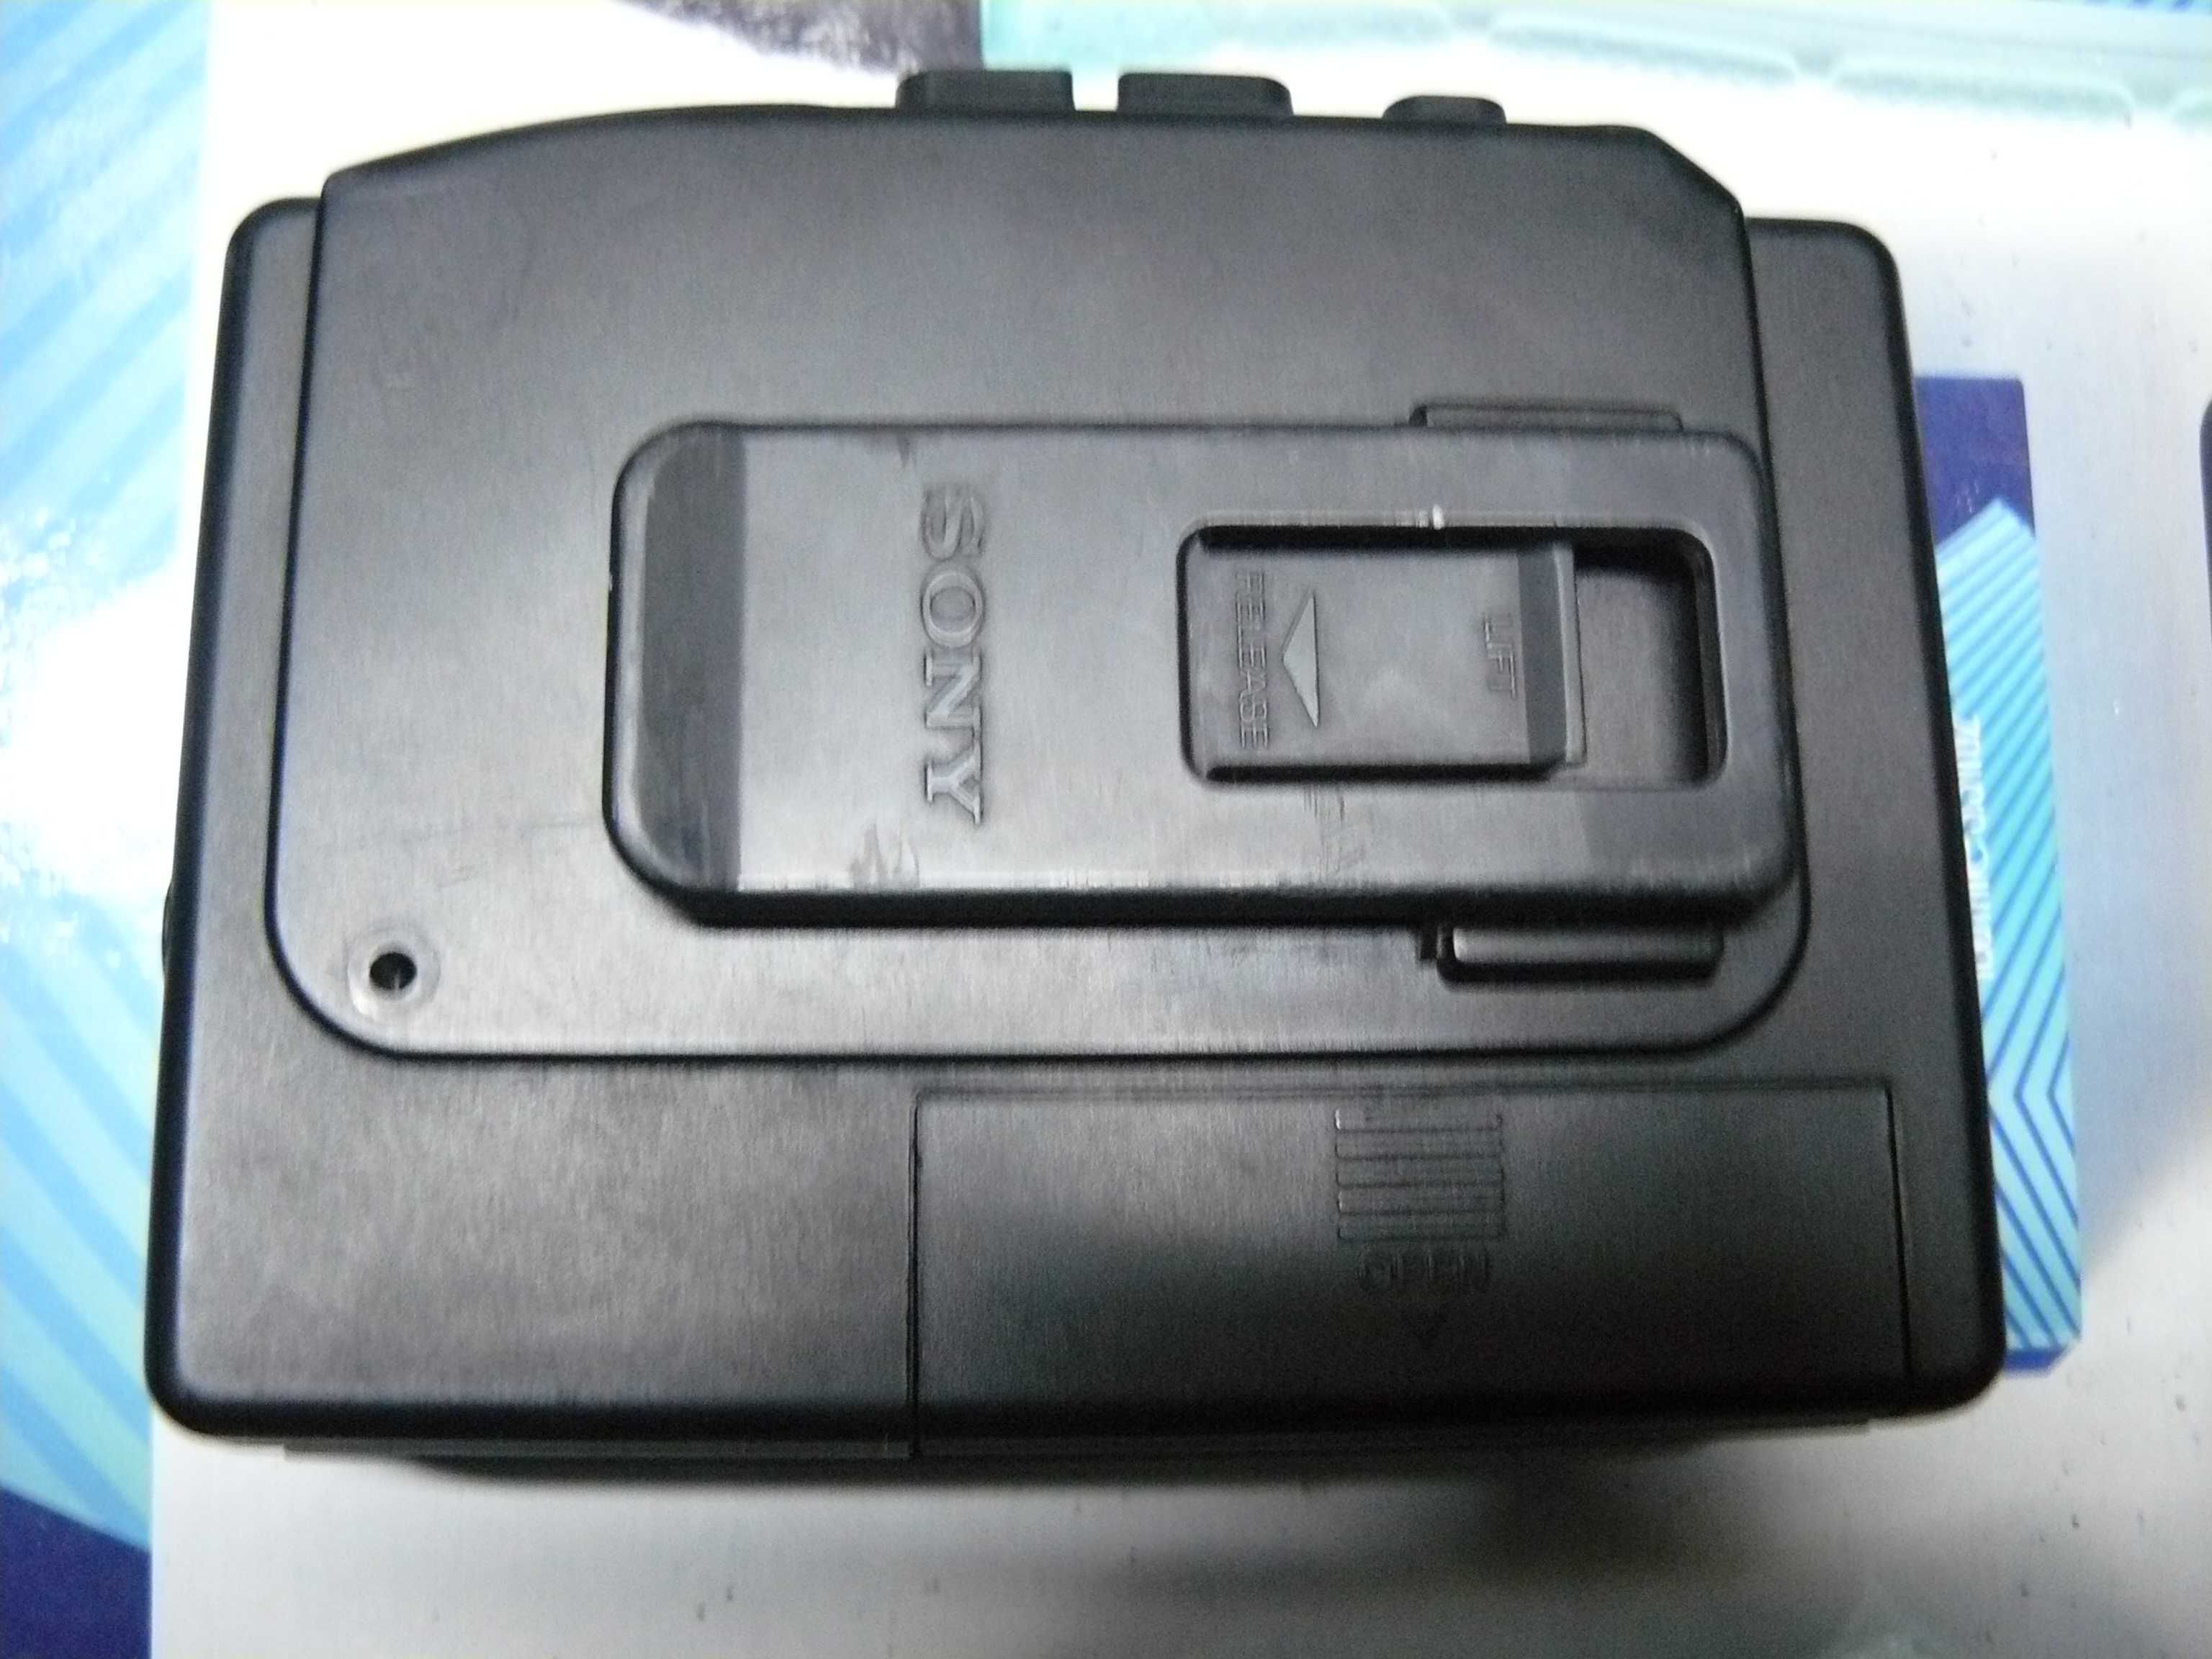 Walkman Sony z auto reverse kpl.